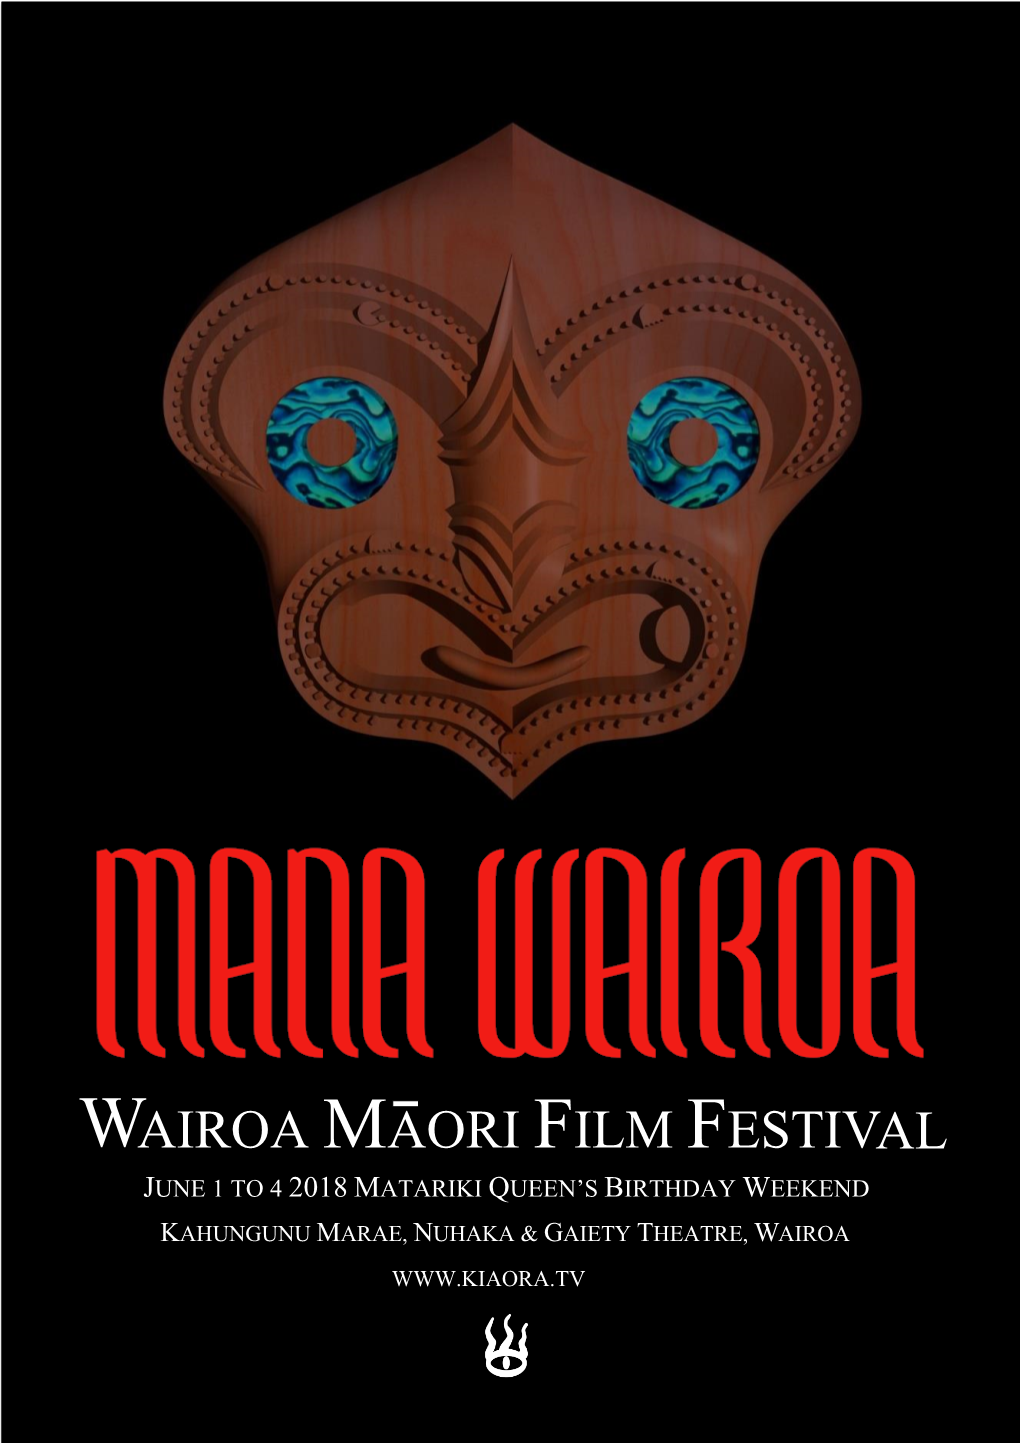 Wairoa Maori Film Festival June 1 to 4 2018 Matariki Queen’S Birthday Weekend